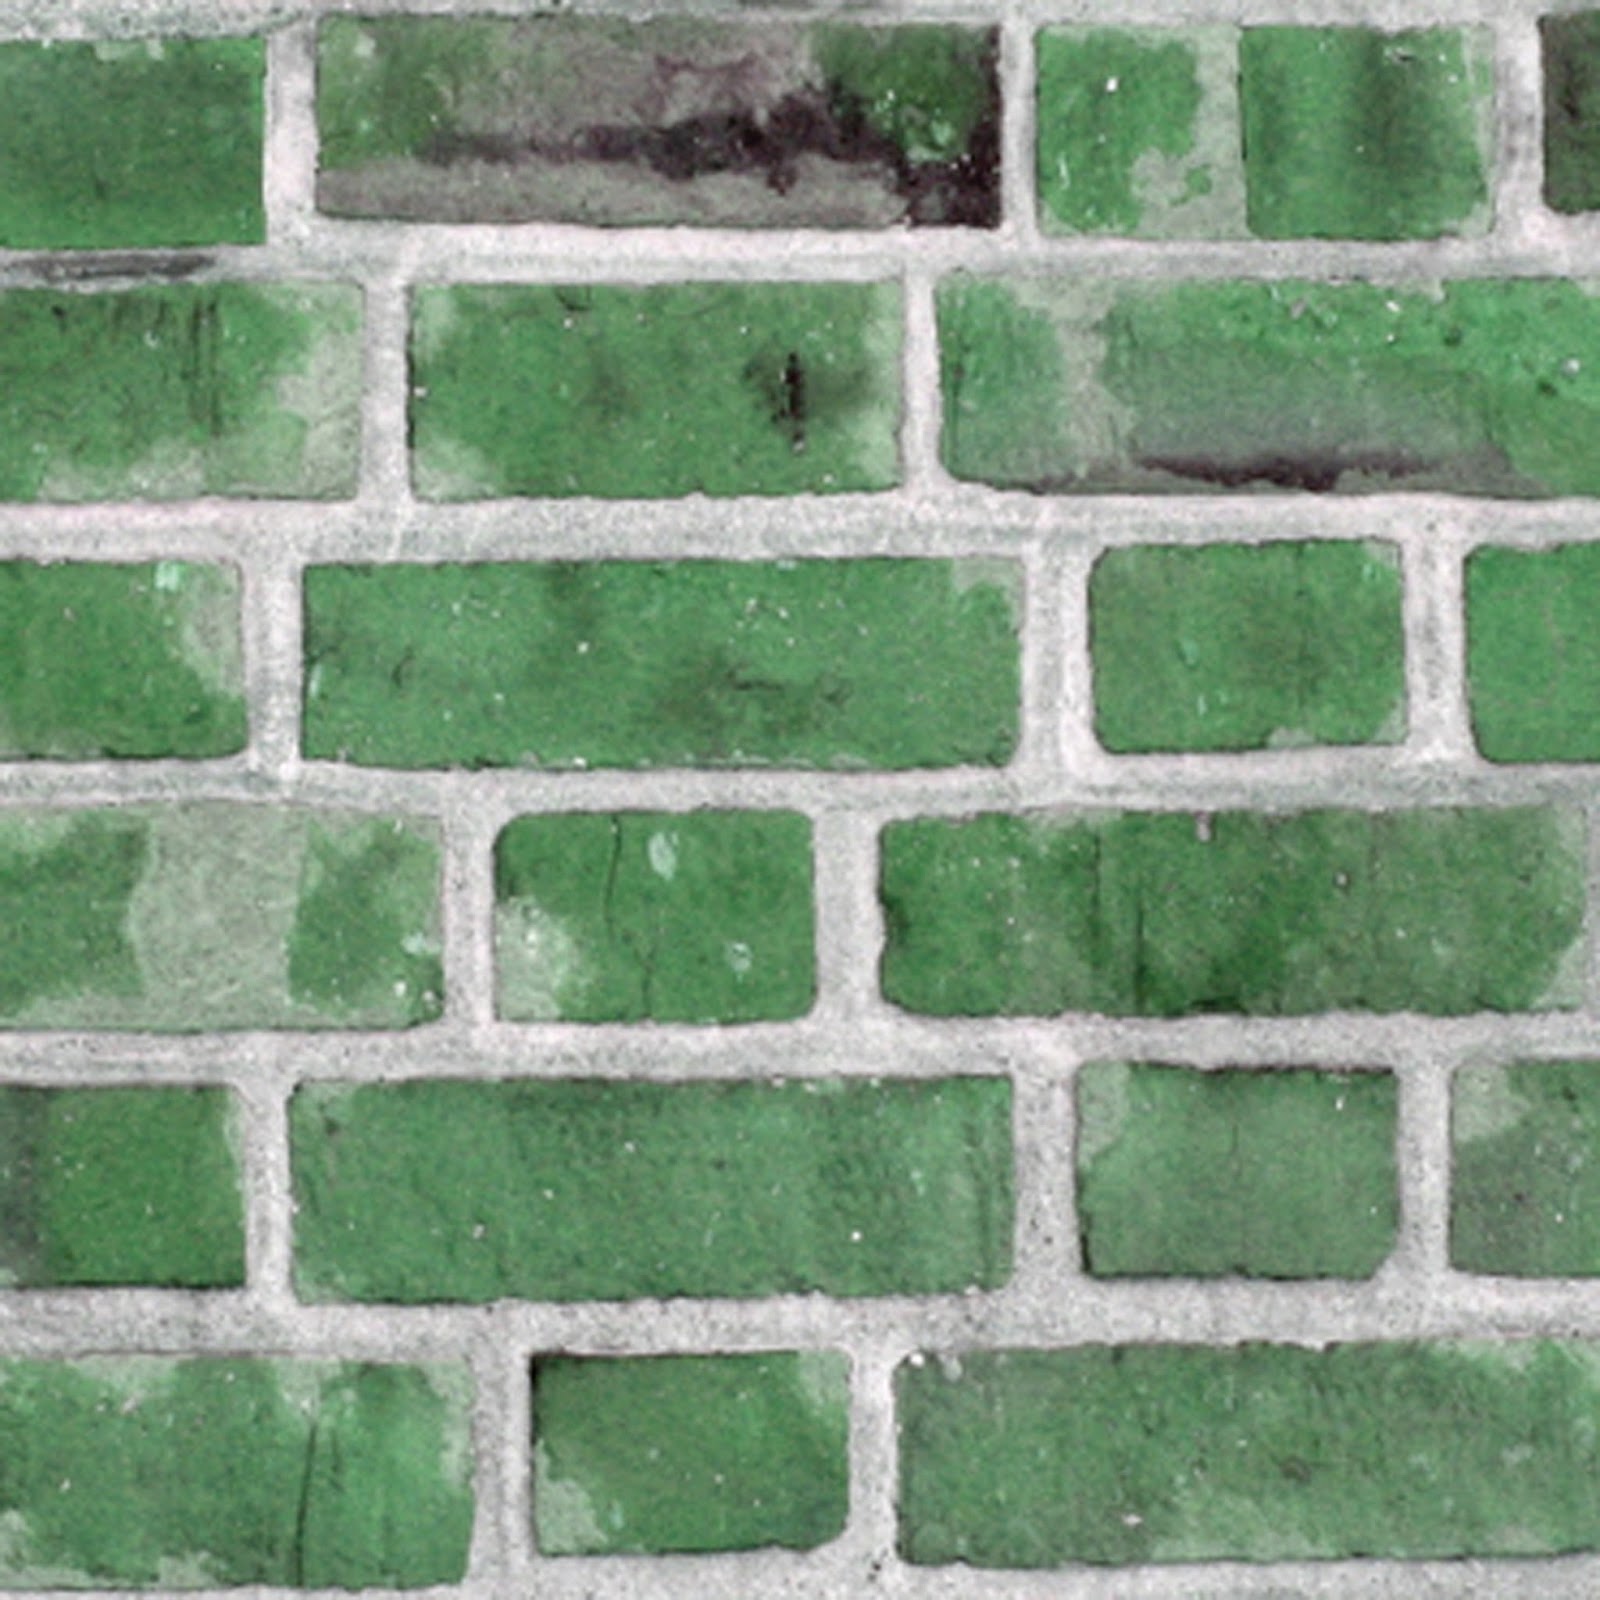 coloured brick wallpaper,green,brick,brickwork,wall,moss